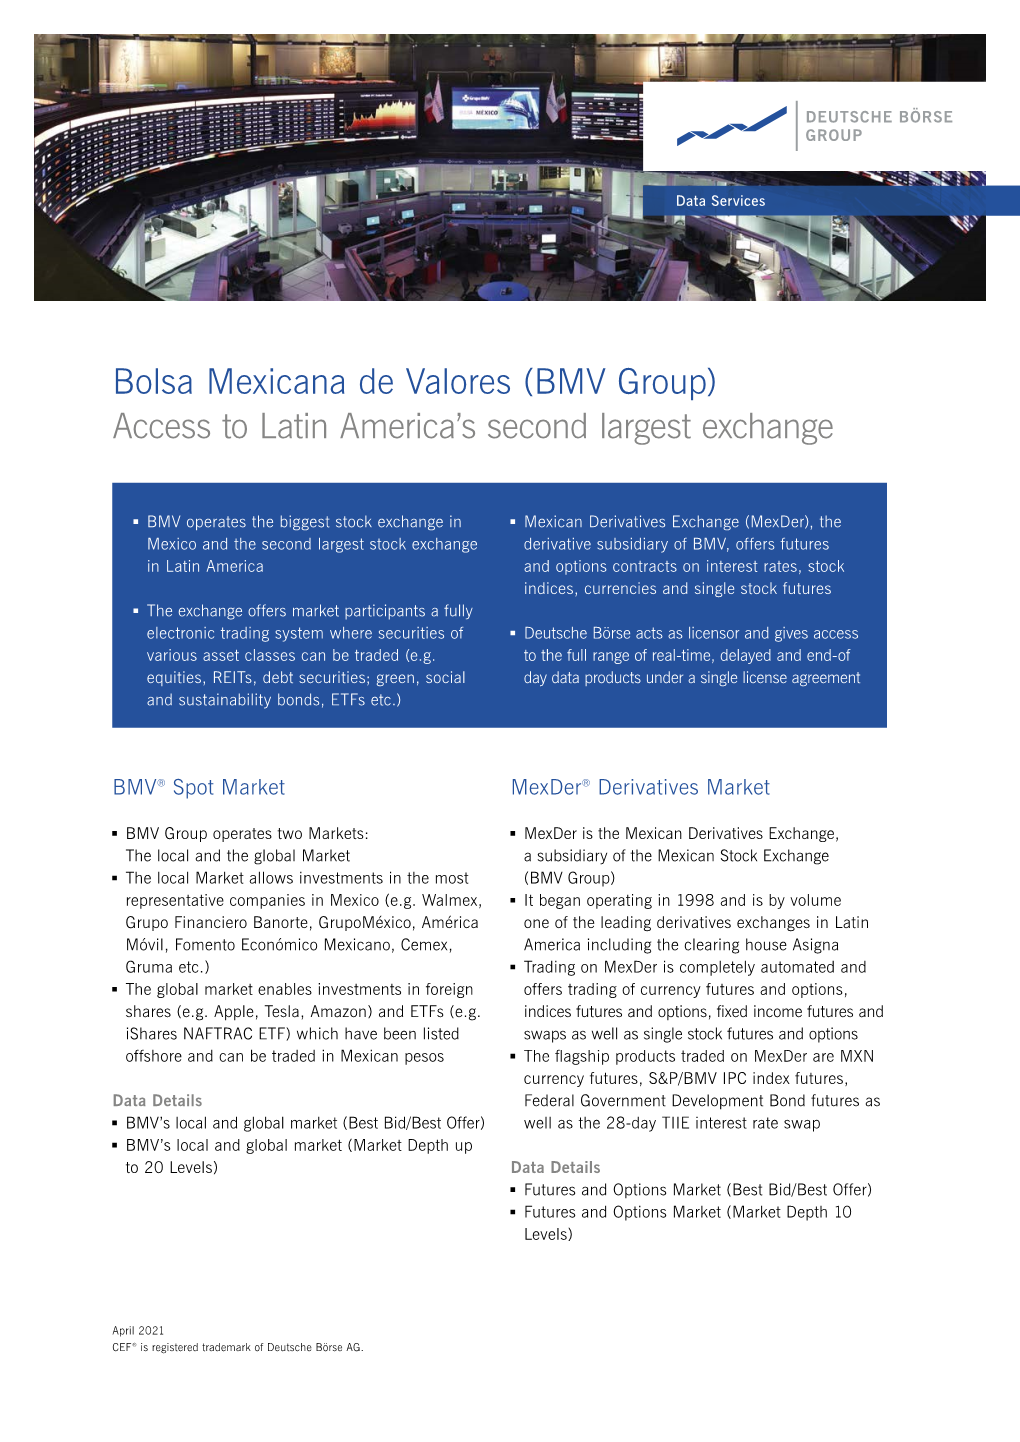 Bolsa Mexicana De Valores (BMV Group) Access to Latin America’S Second Largest Exchange